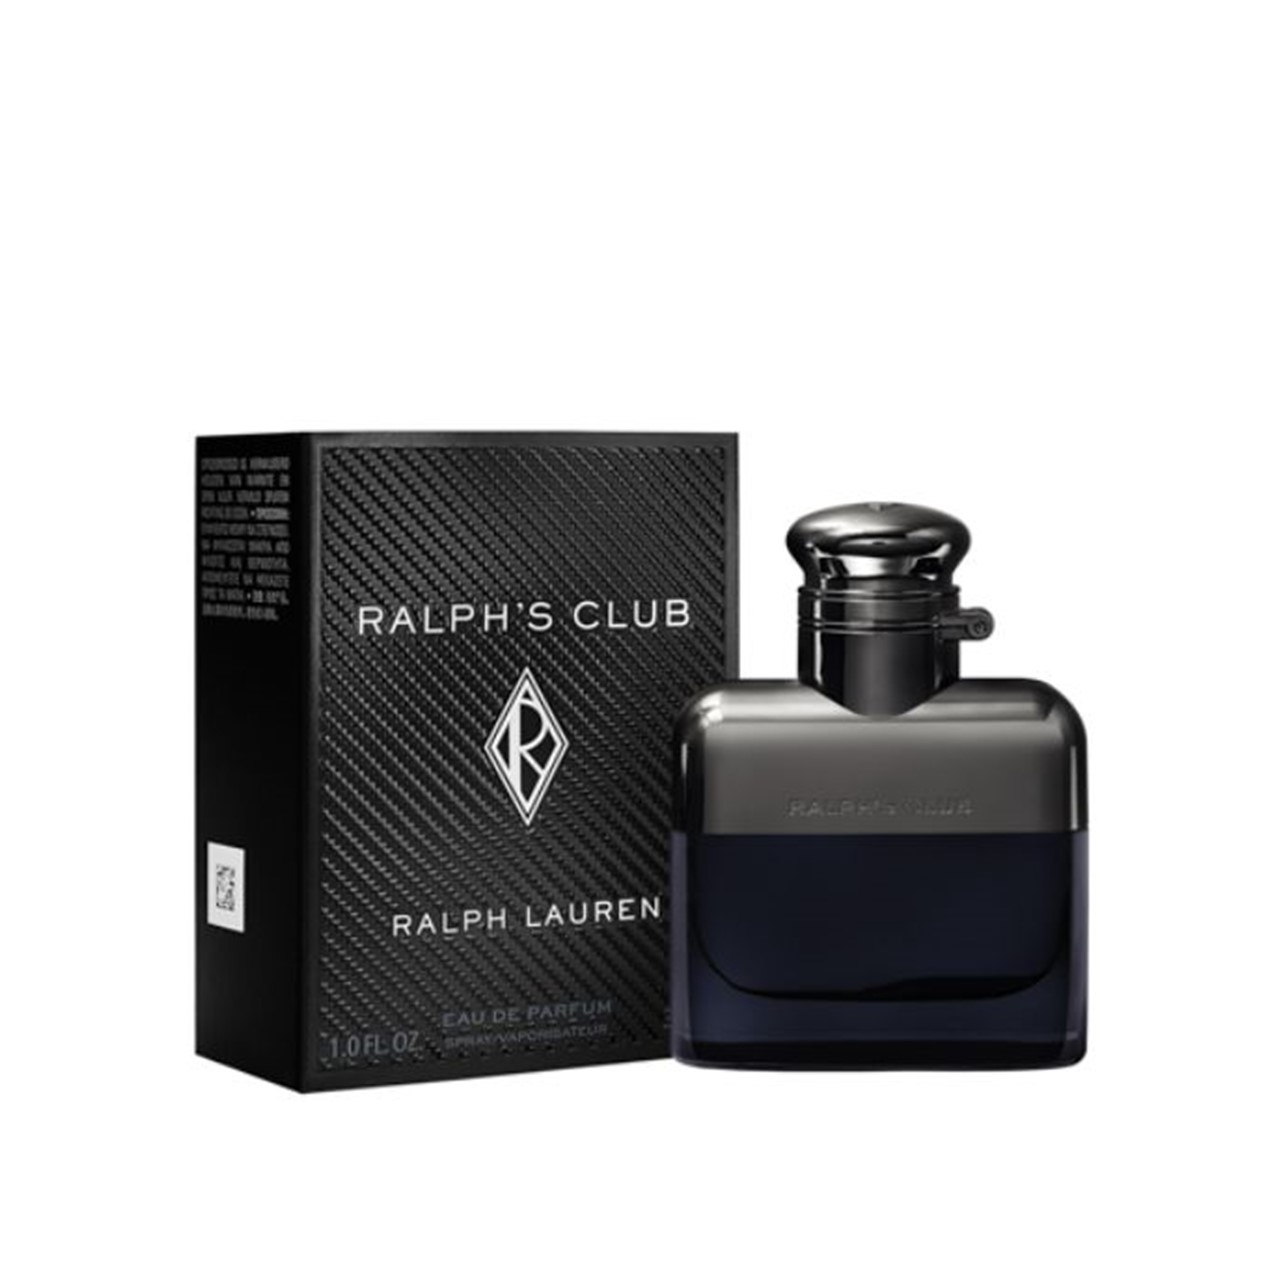 Buy Ralph Lauren Ralph's Club Eau de Parfum For Men 30ml (1.0fl oz